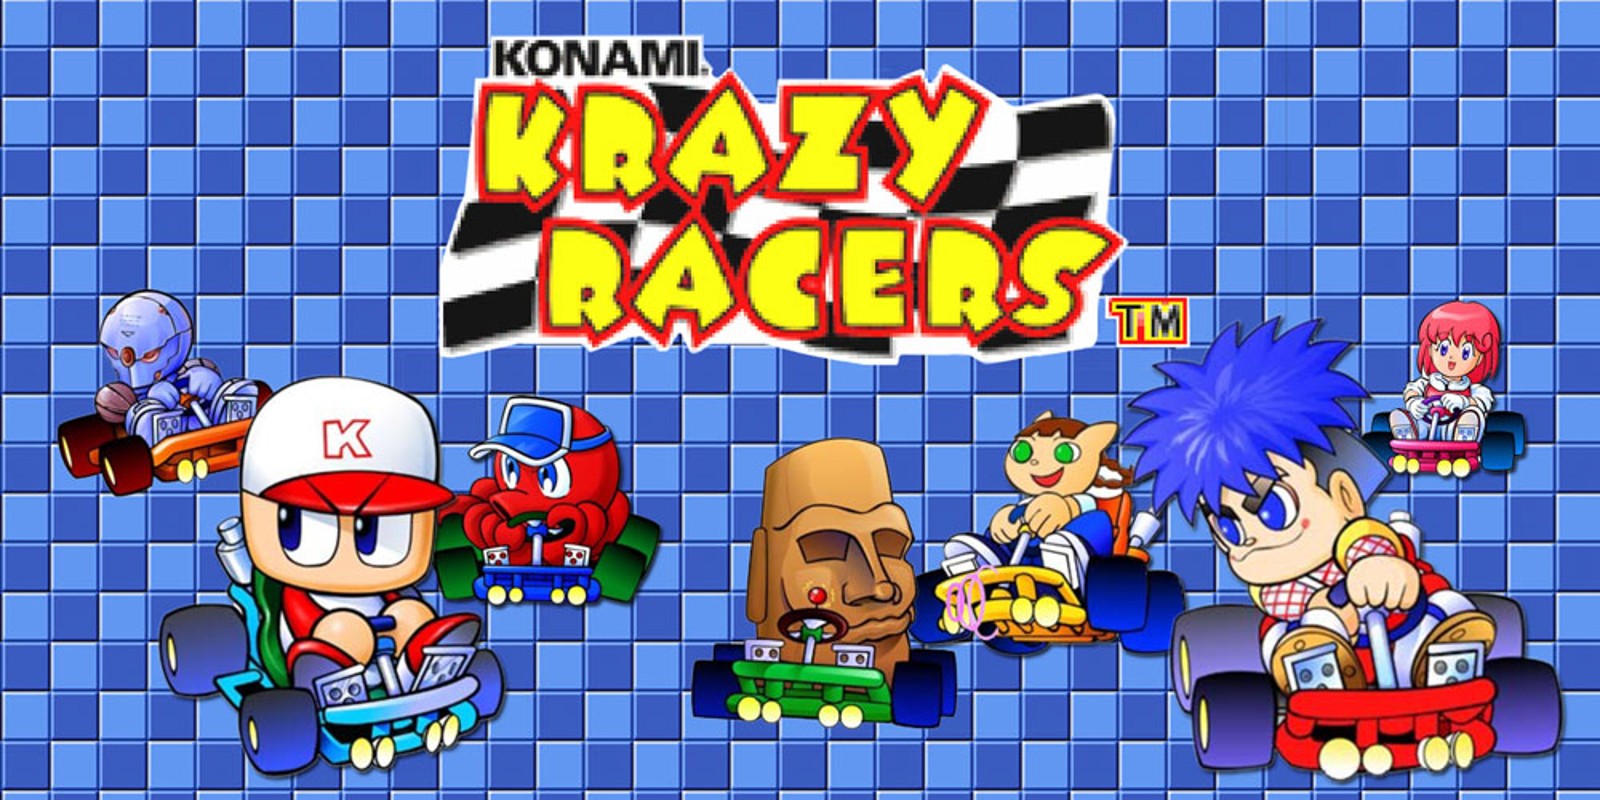 Konami Krazy Racers™